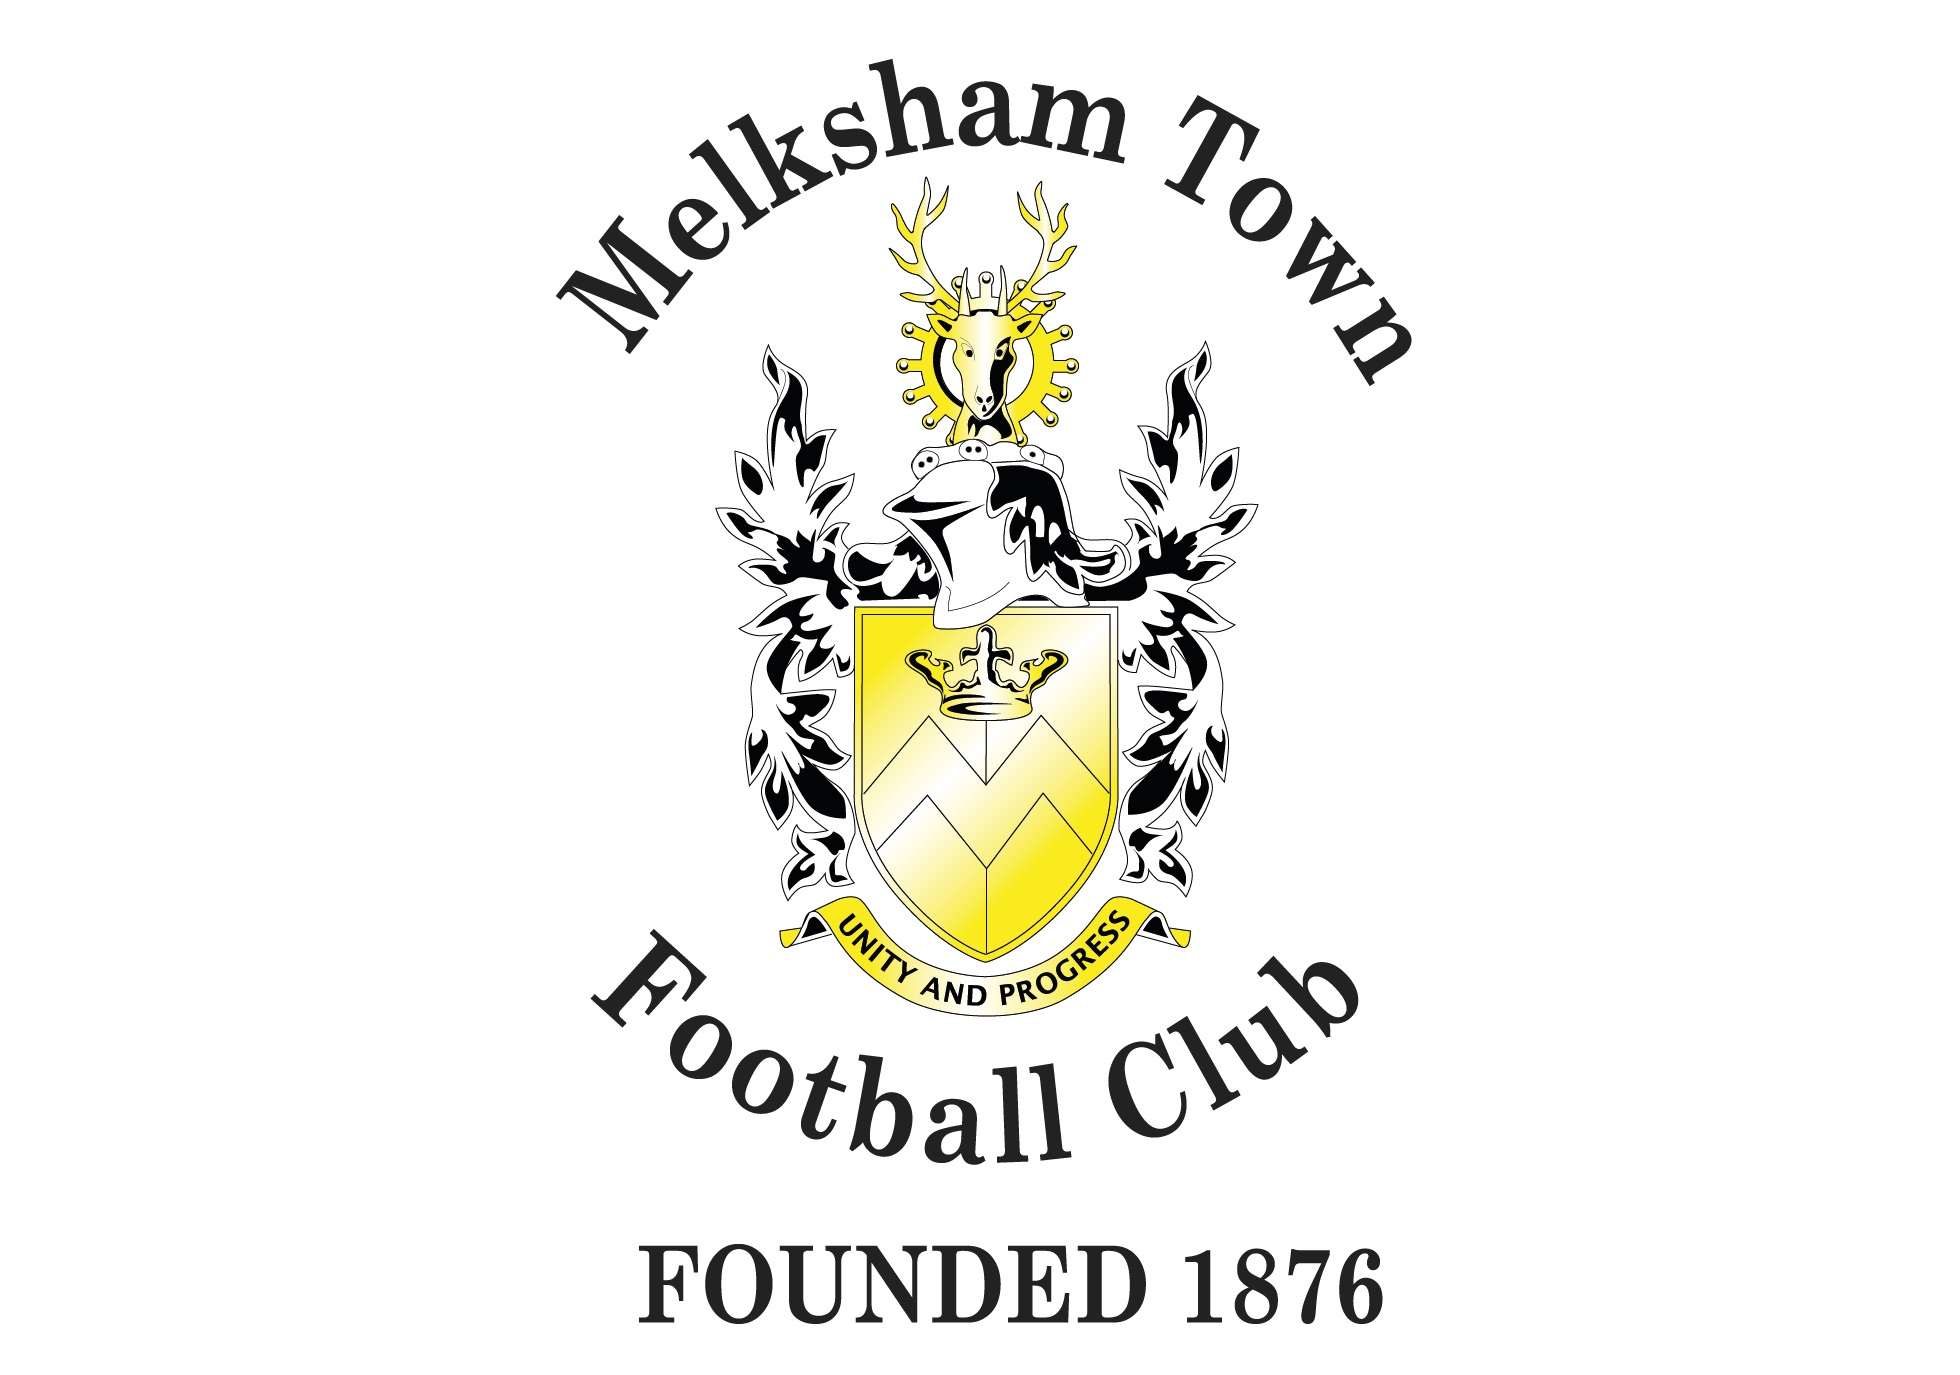 melksham-town-fc-24-football-club-facts